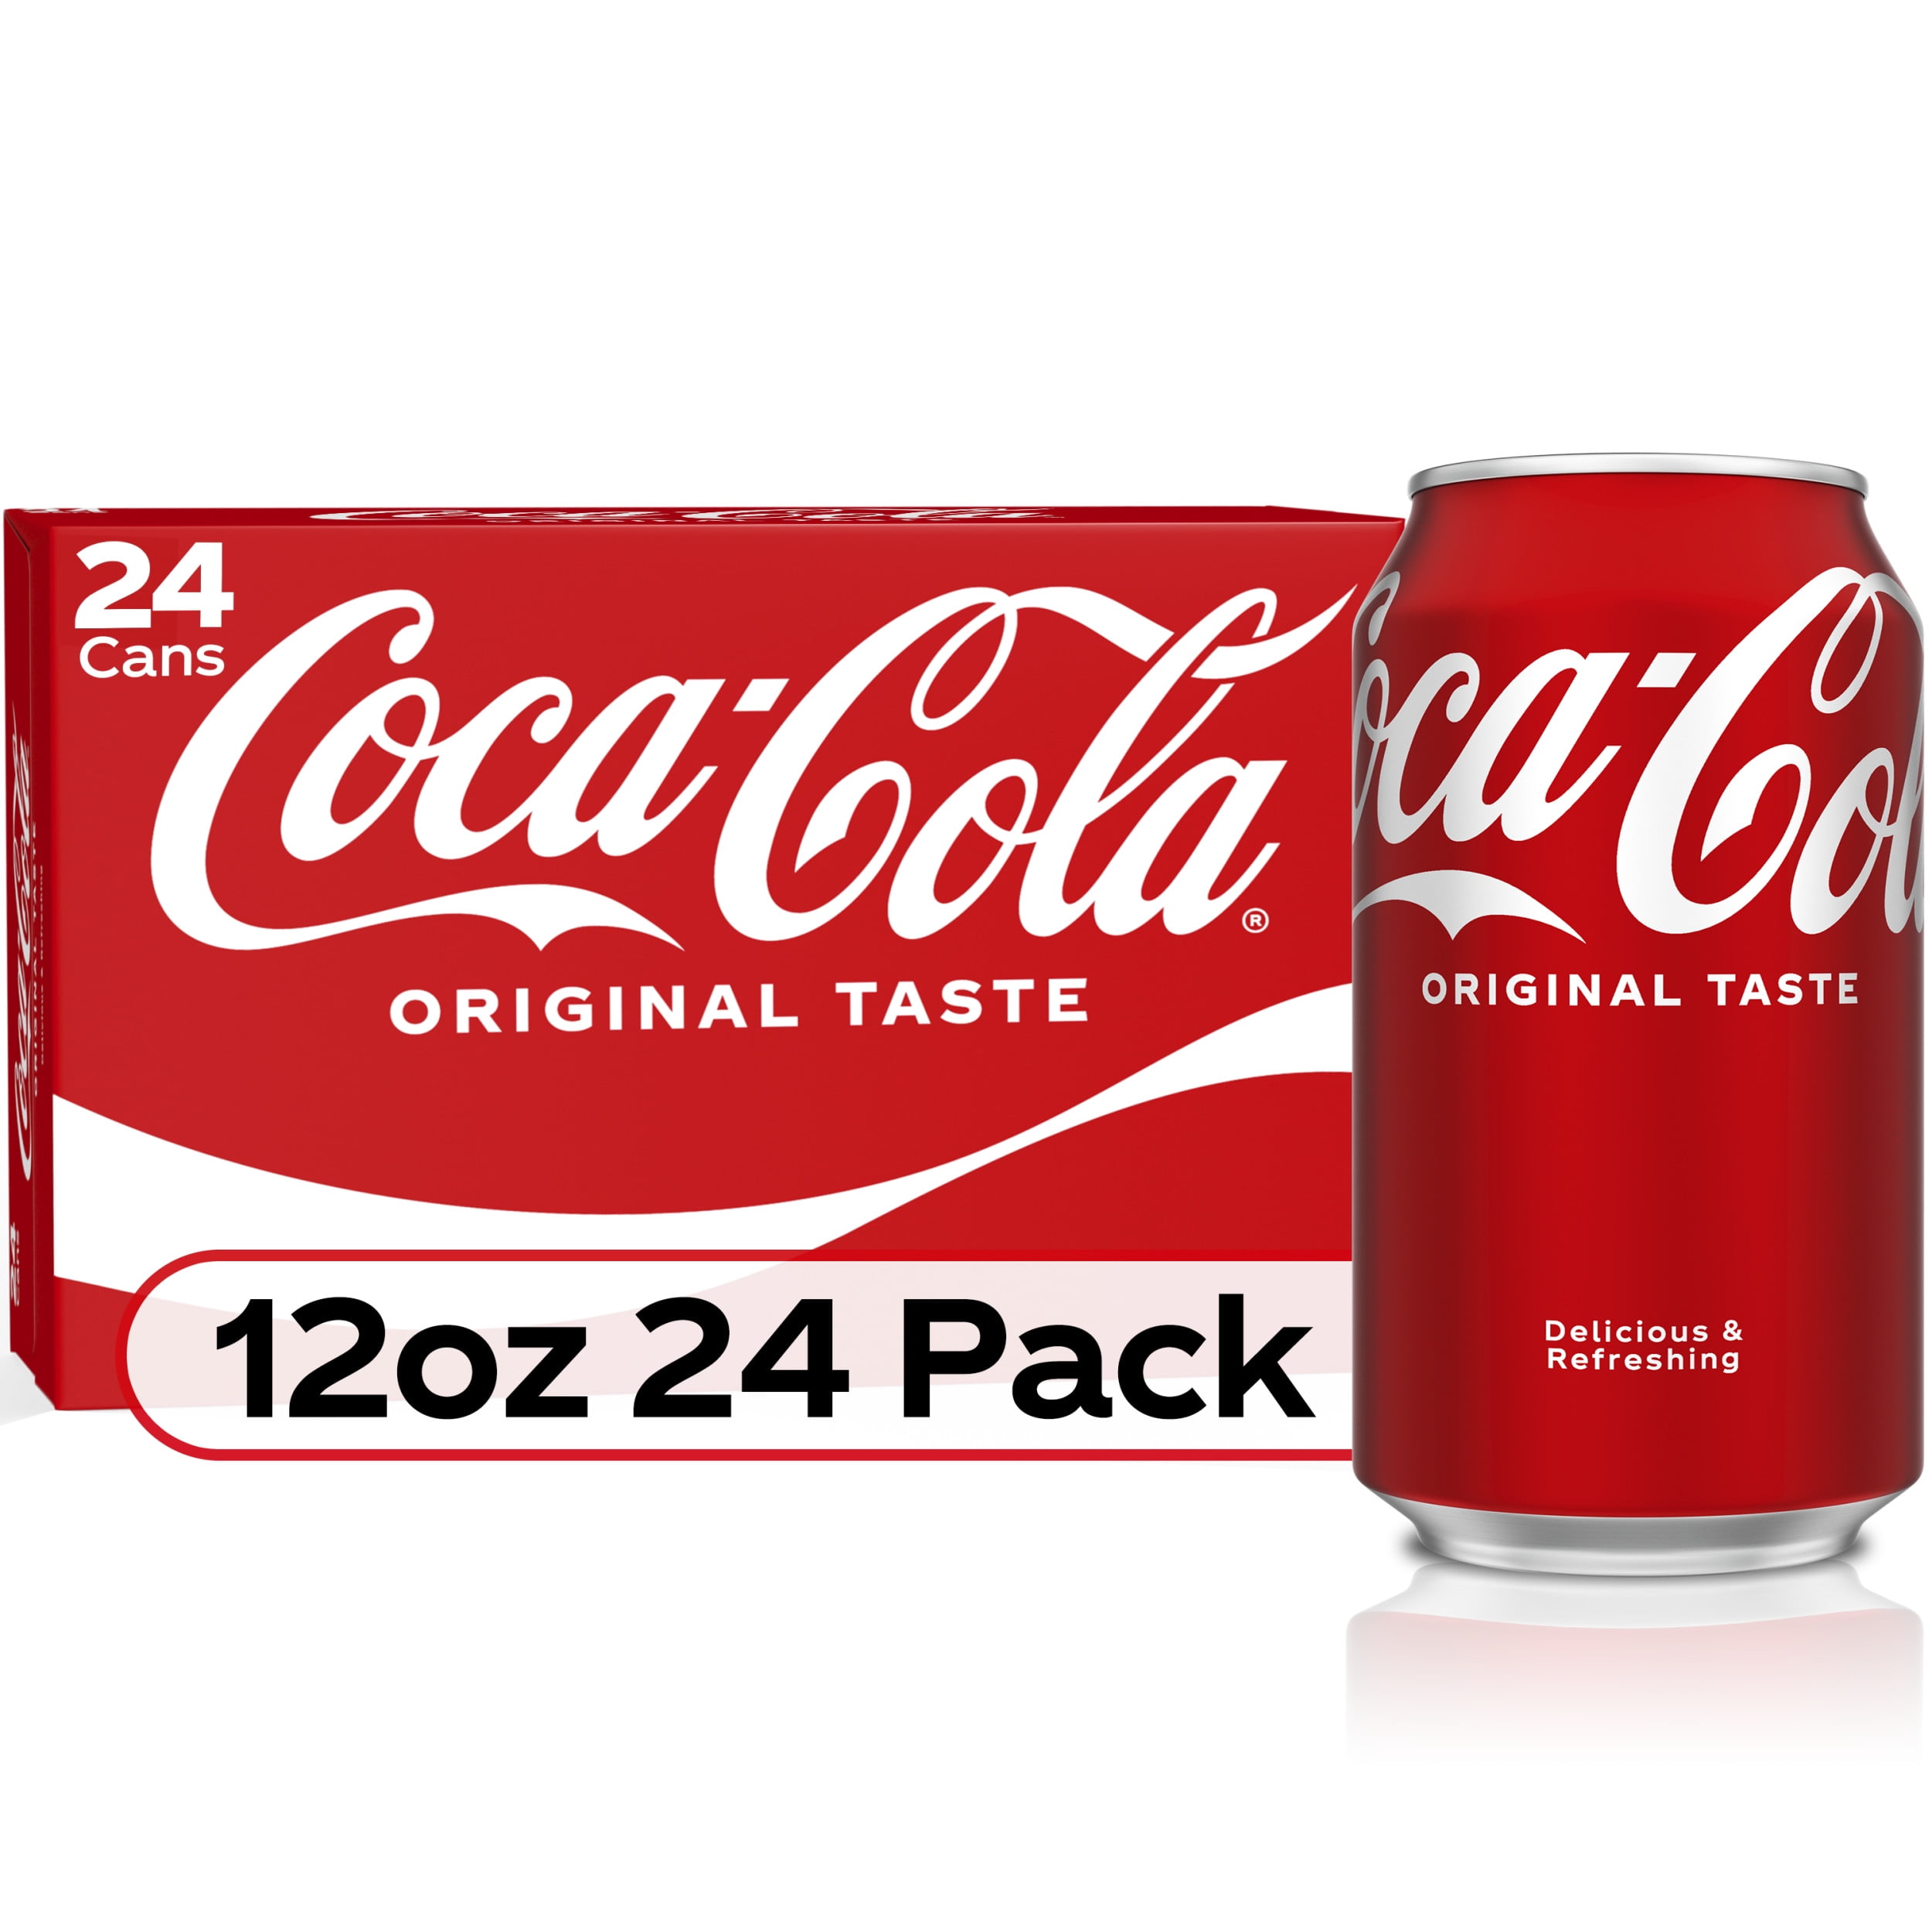 Coke Coca Cola Vintage Bottles Tin Metal Sign Time line Years Pop Soda Diet